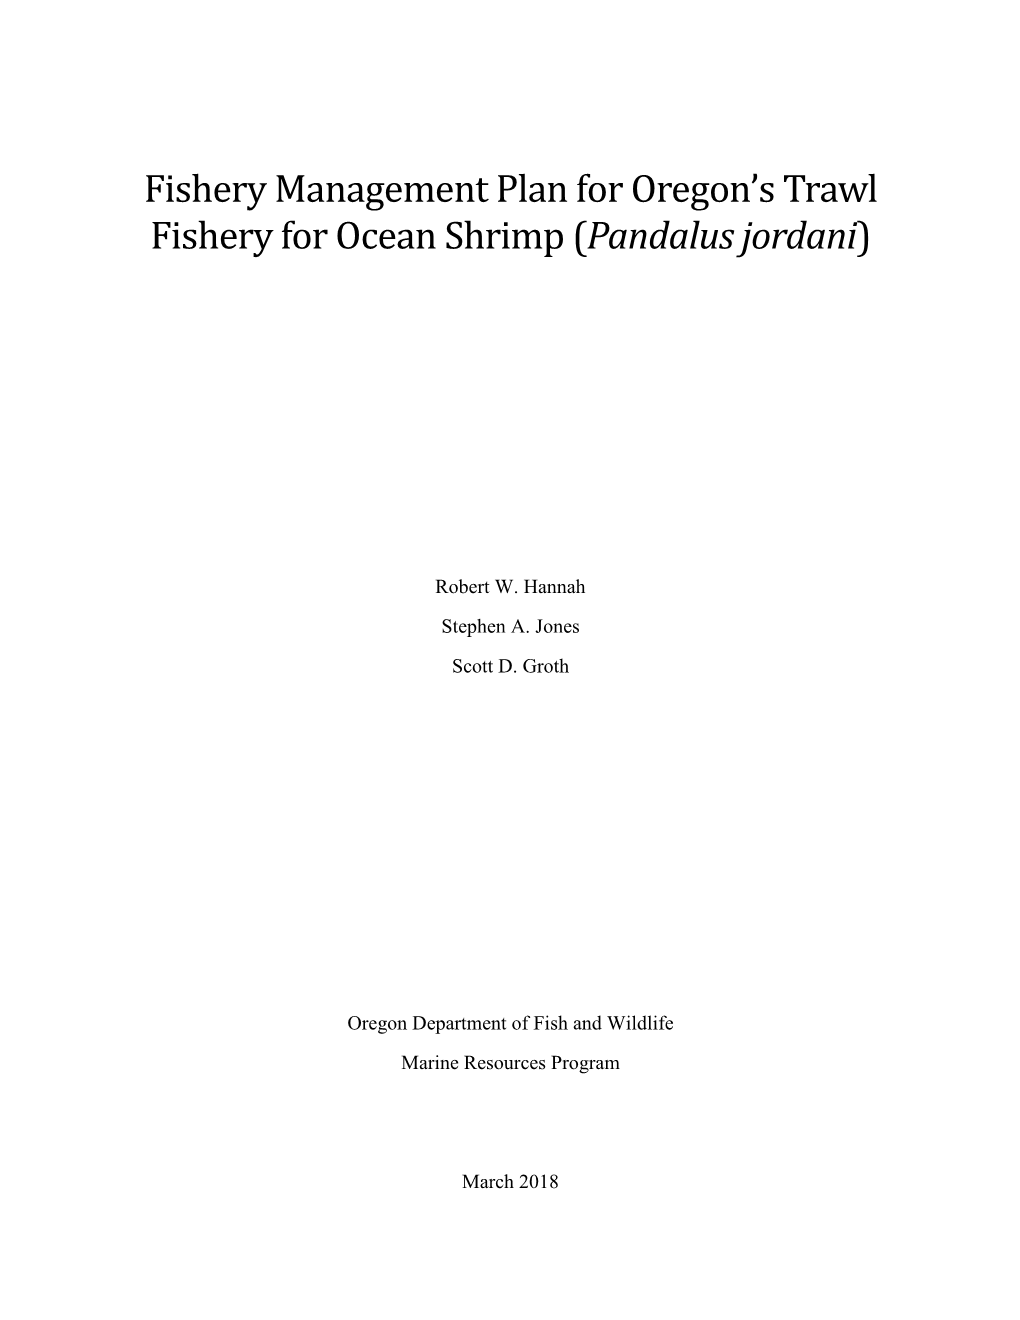 Fishery Management Plan for Oregon's Trawl Fishery for Ocean Shrimp (Pandalus Jordani)